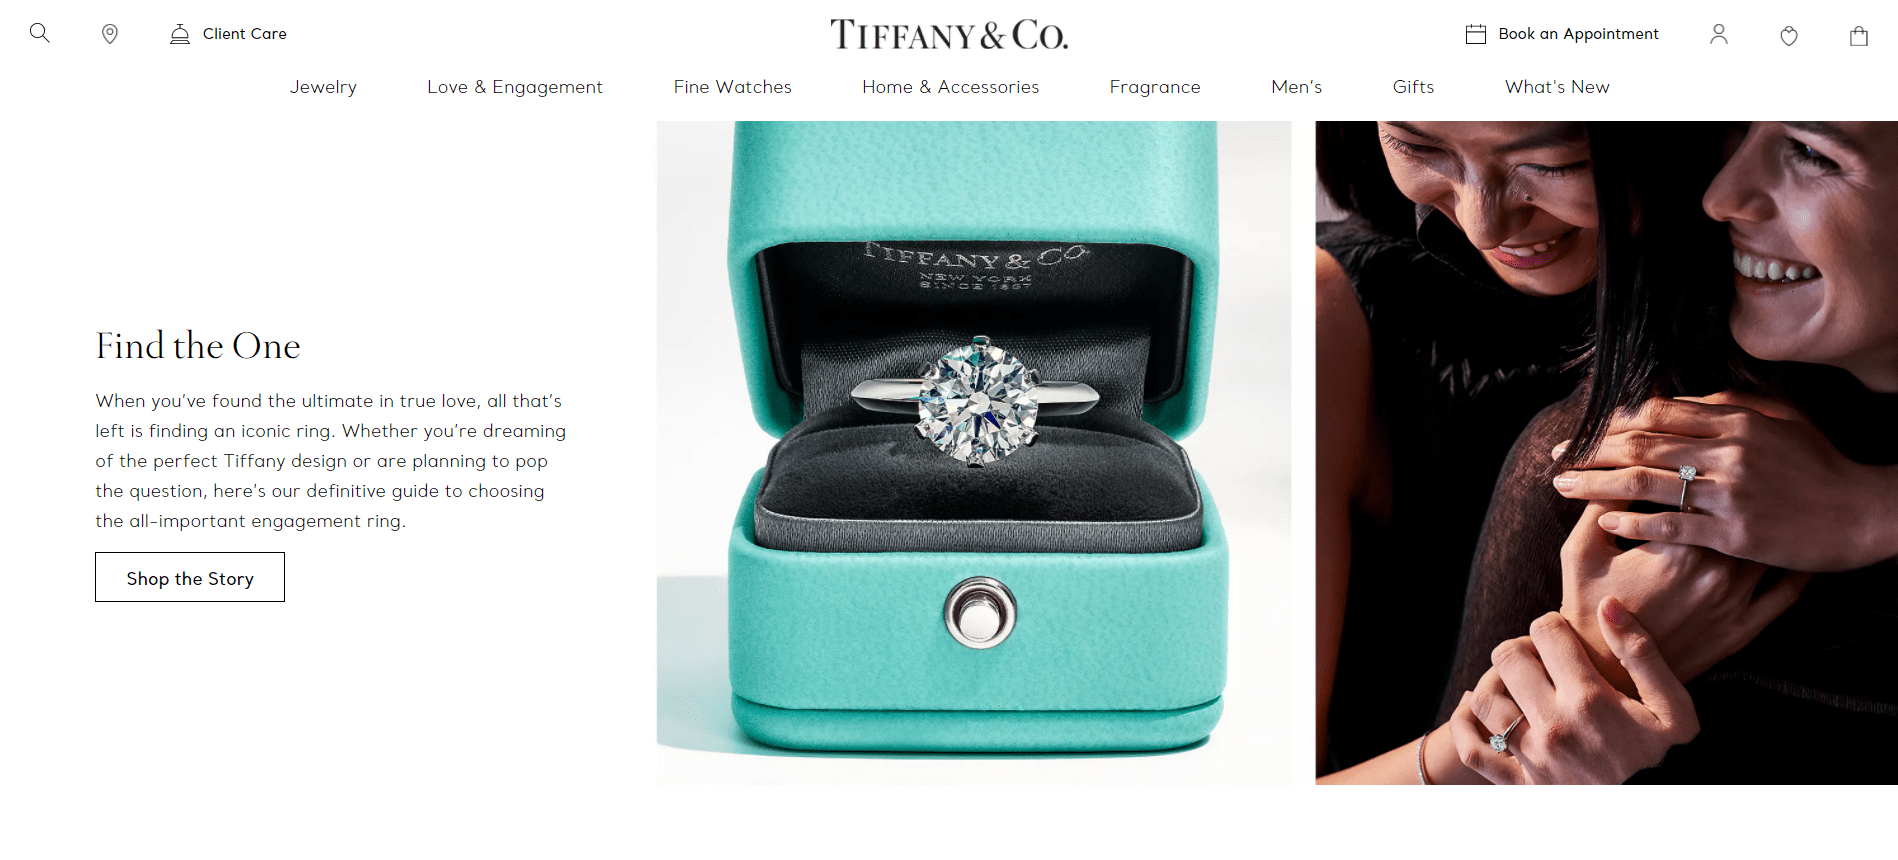 Tiffany & Co product desciption